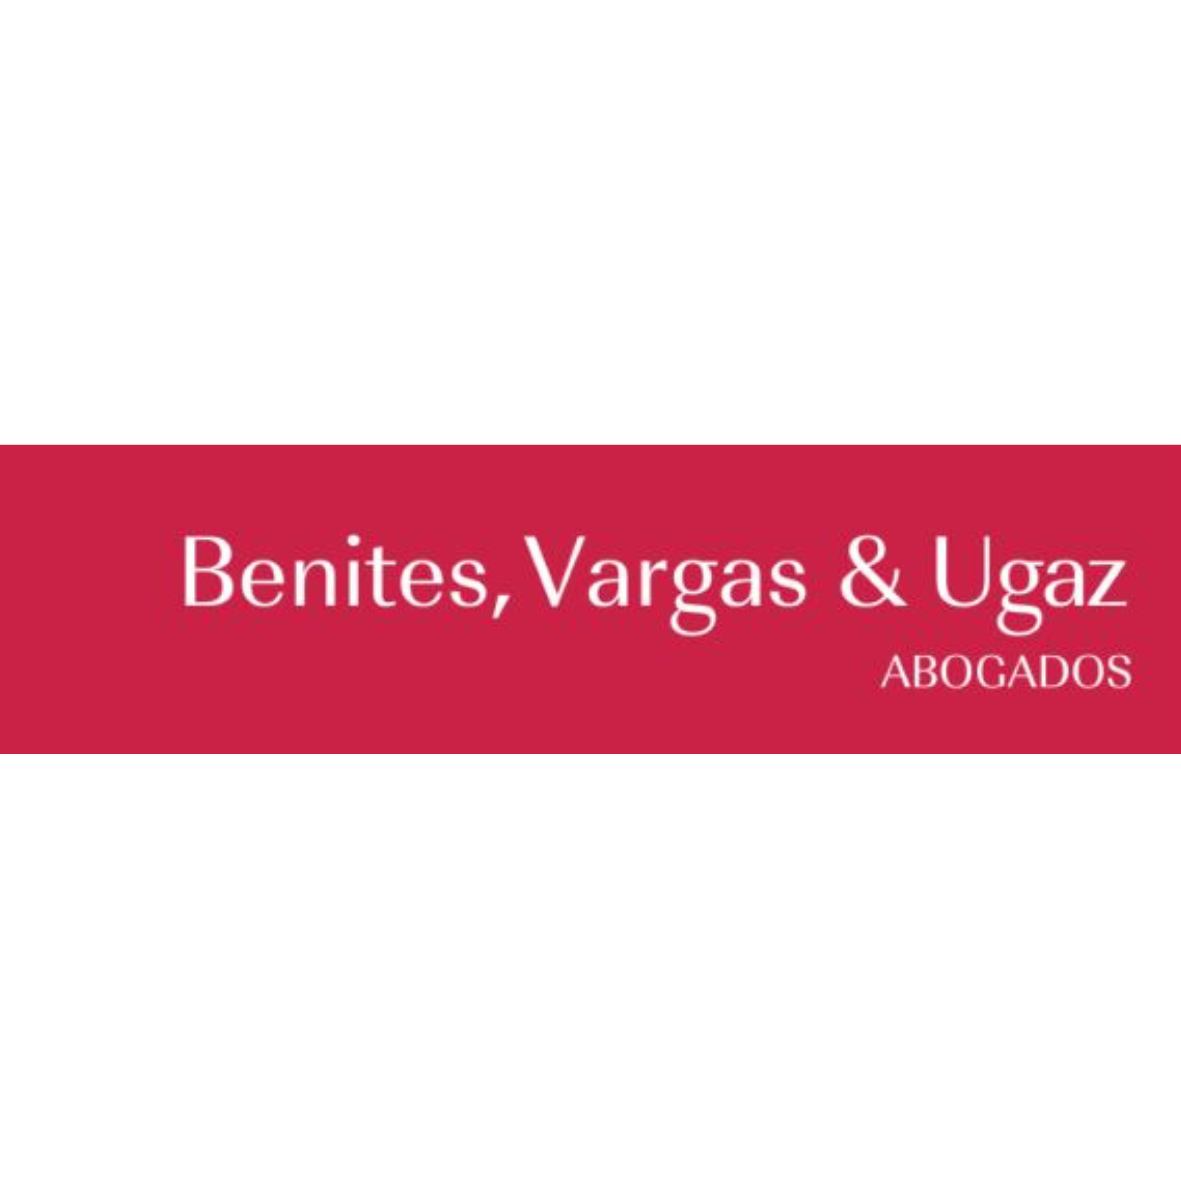 Benites, Vargas & Ugáz abogados​